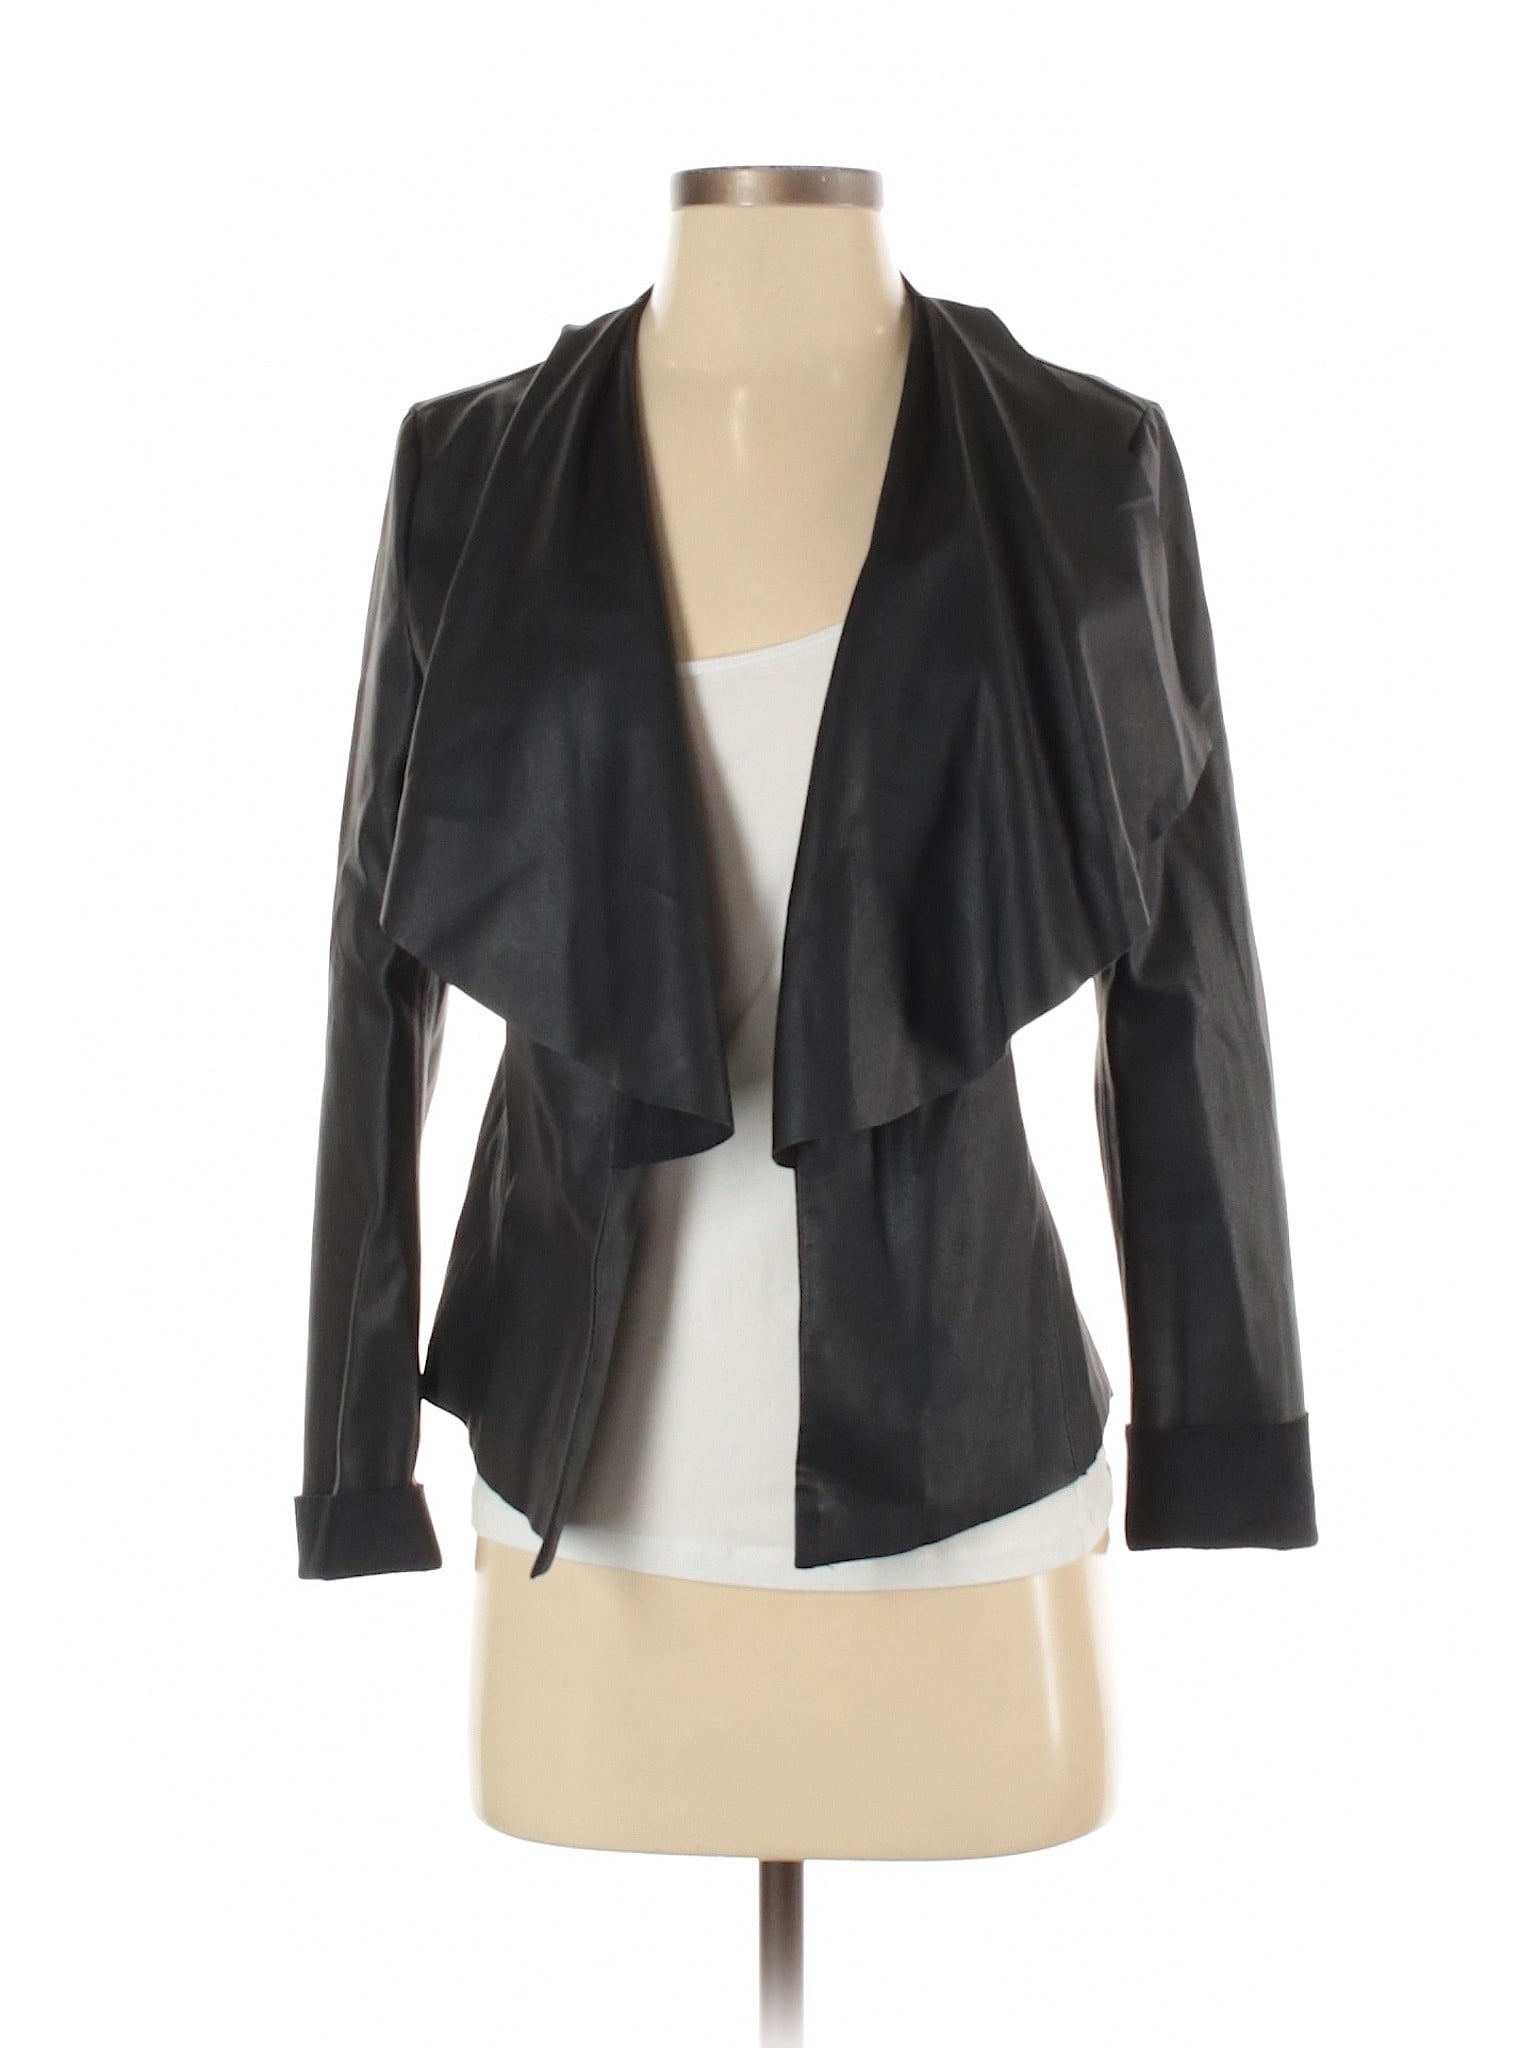 ZARA - Pre-Owned Zara Basic Women's Size S Faux Leather Jacket ...